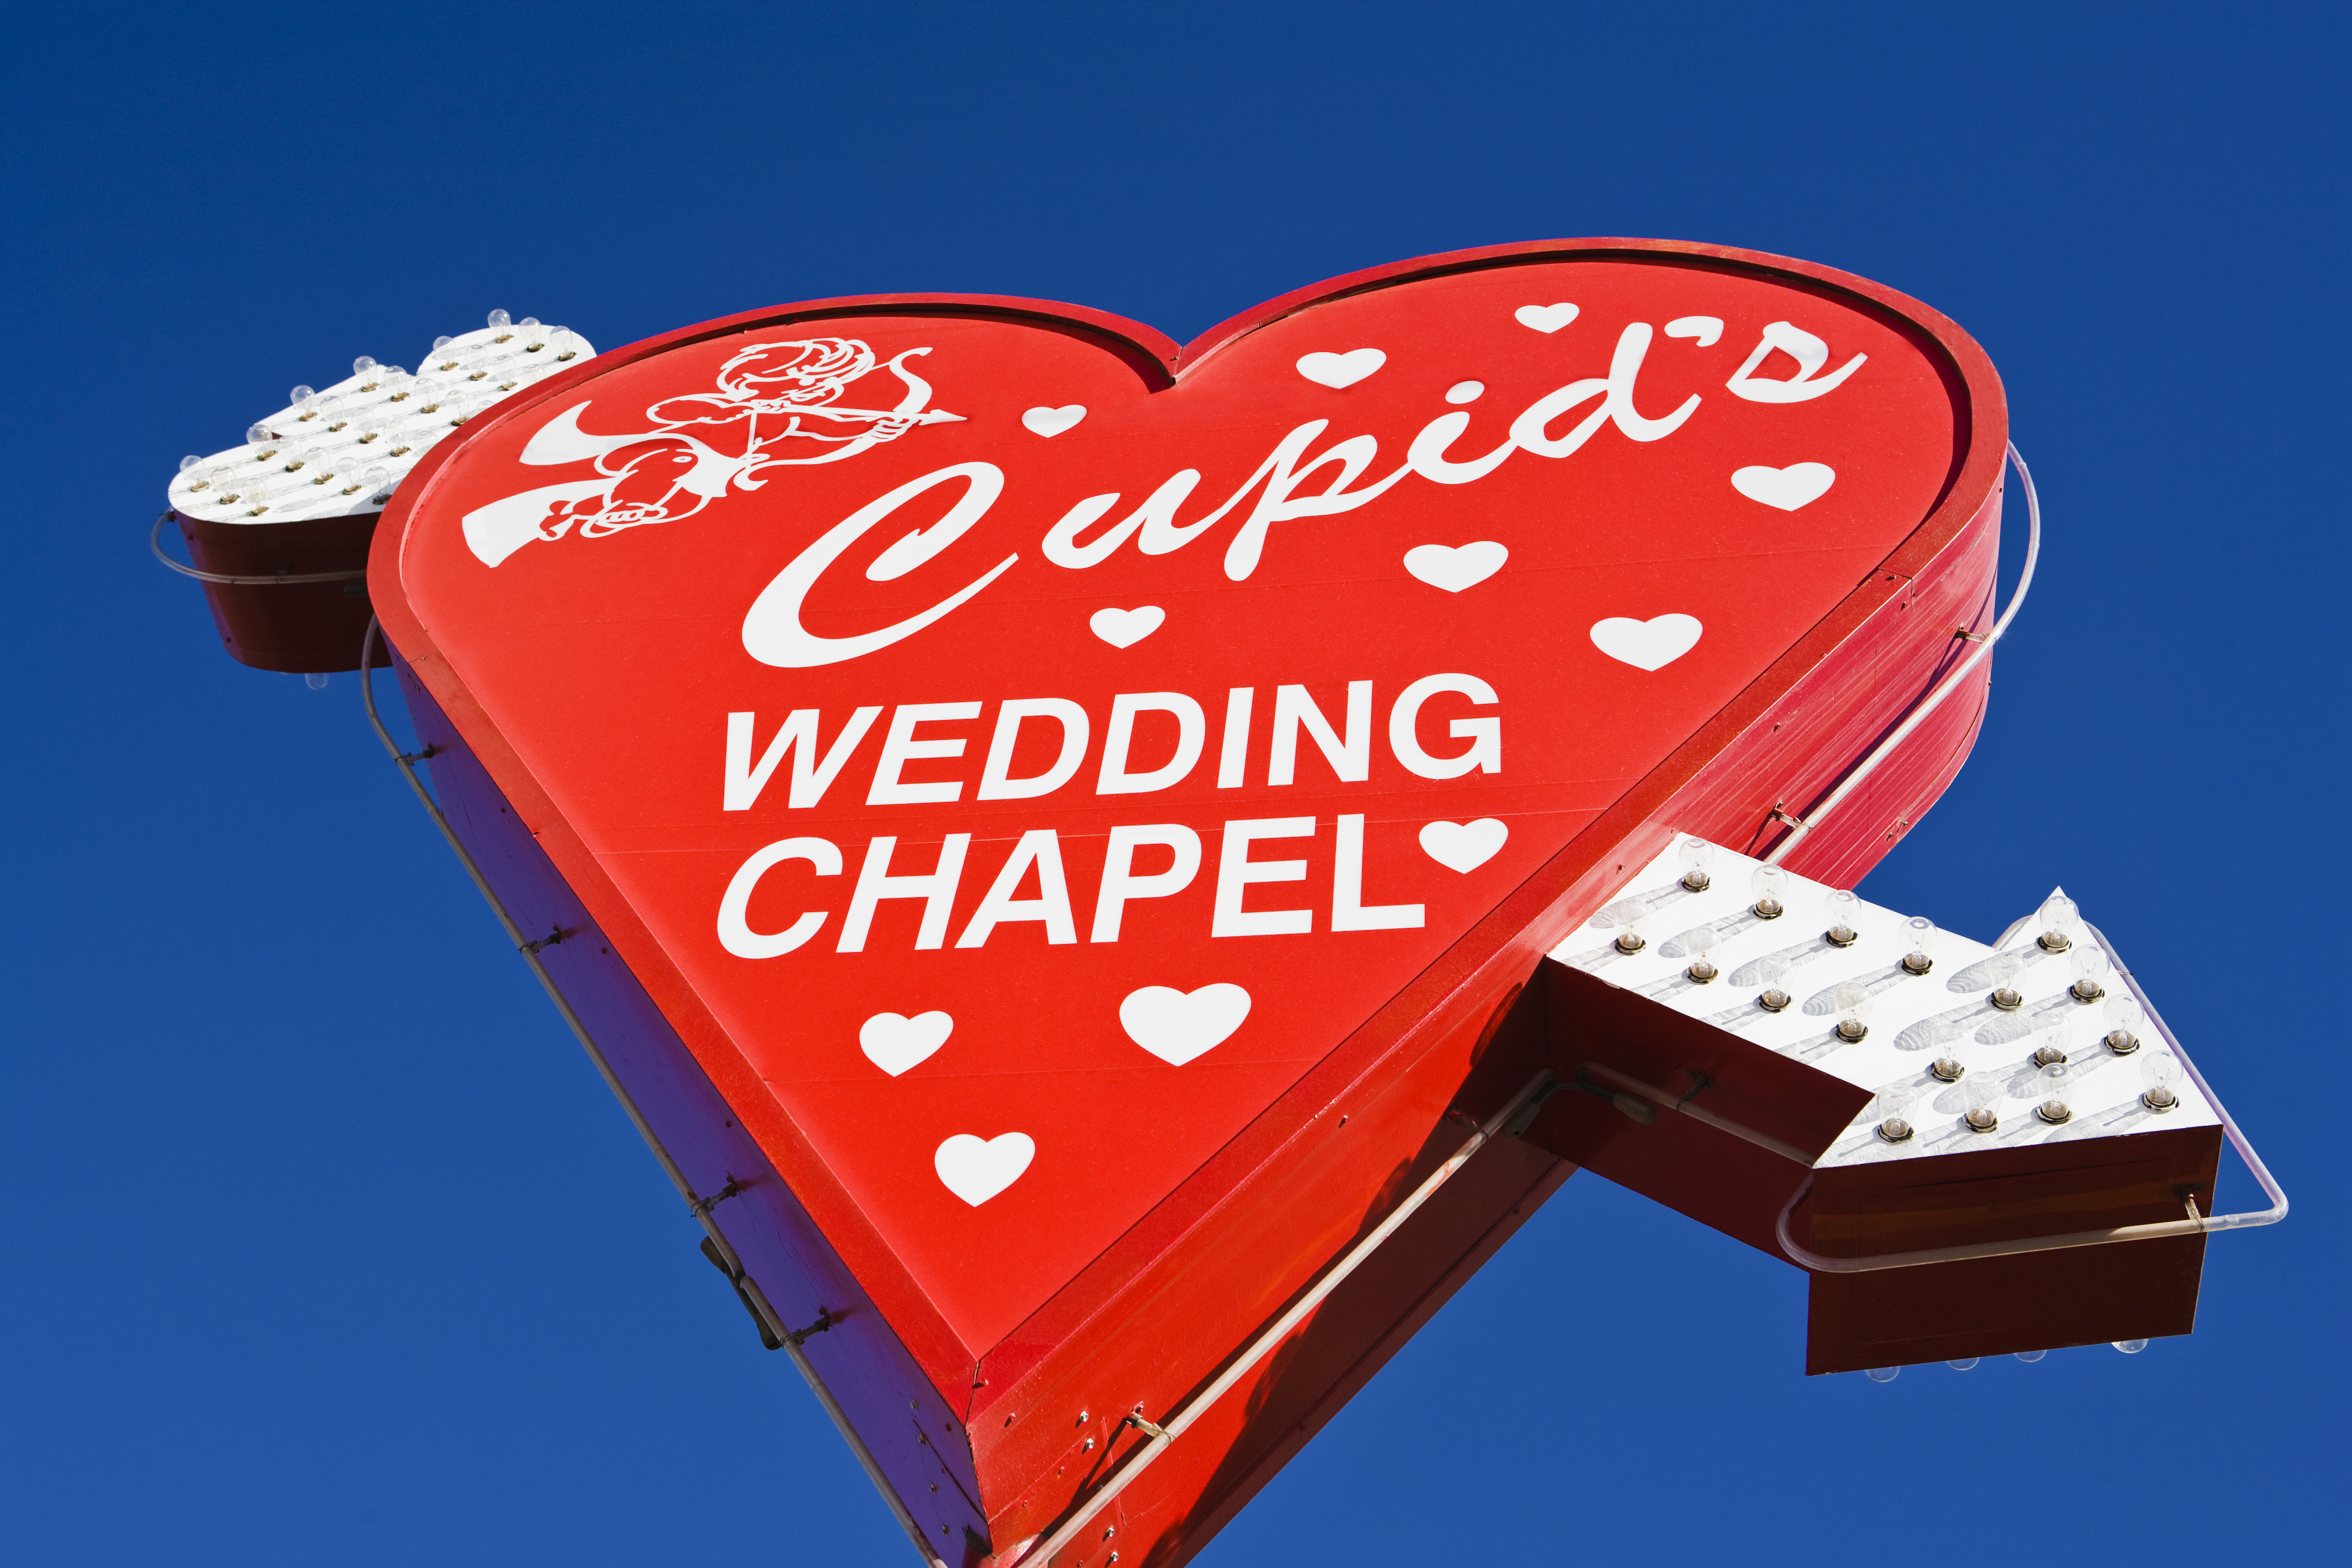 cupids-wedding-chapel-in-las-vegas - Valentine's Day Pictures ...